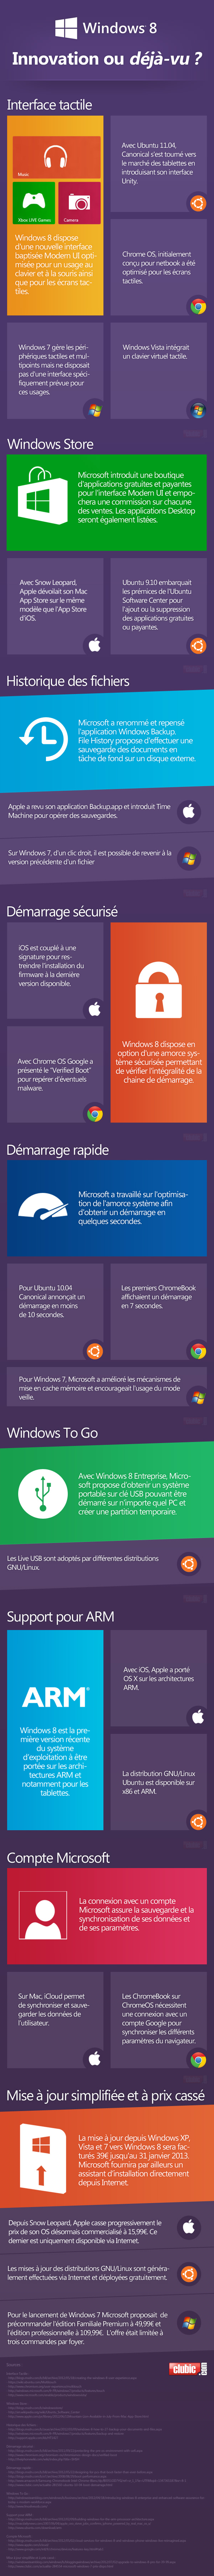 Infographie Windows 8